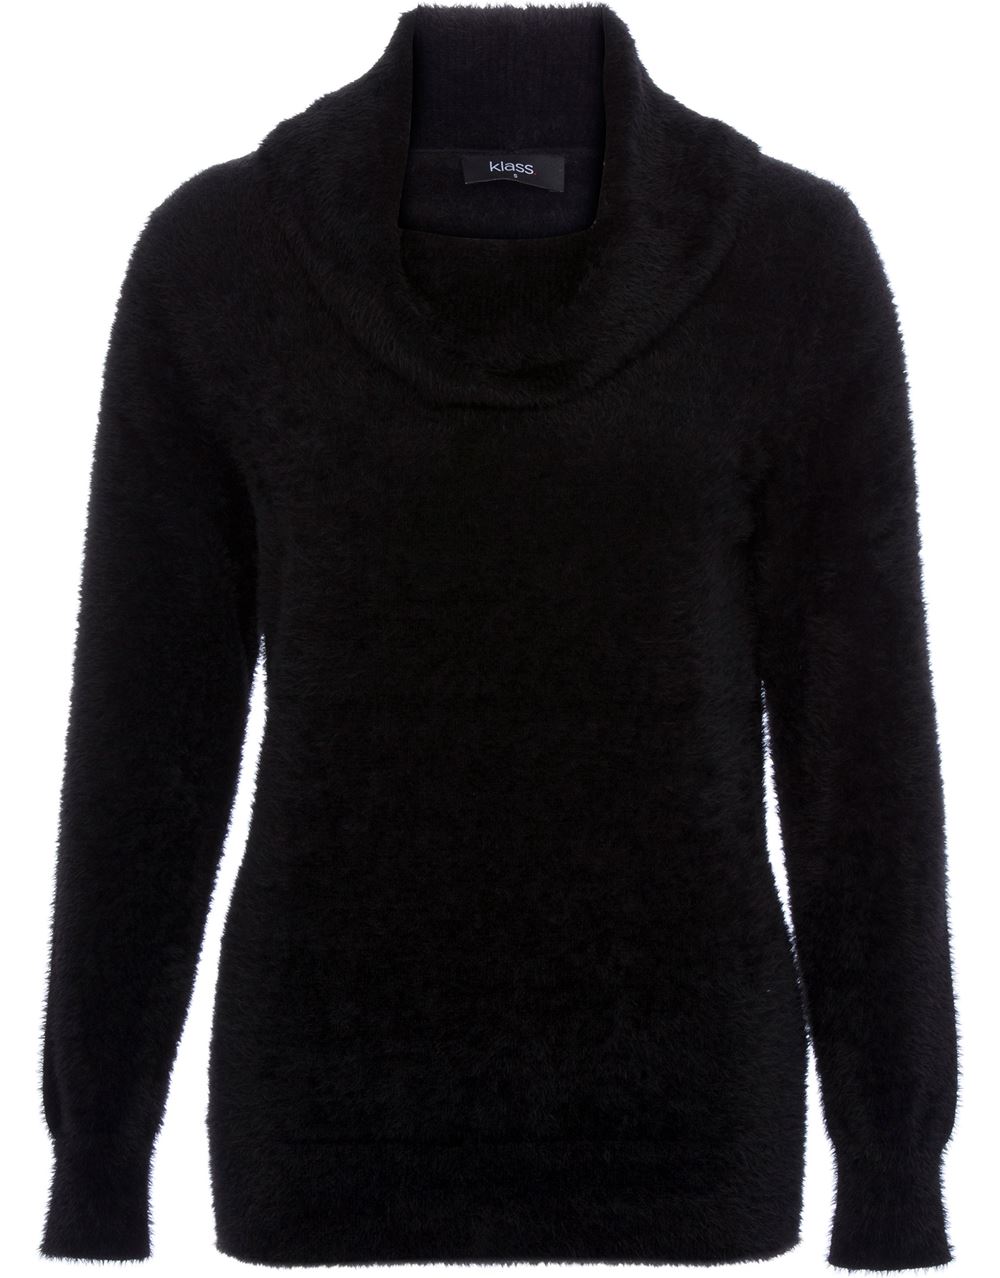 Cowl Neck Eyelash Knit Top in Black | Klass